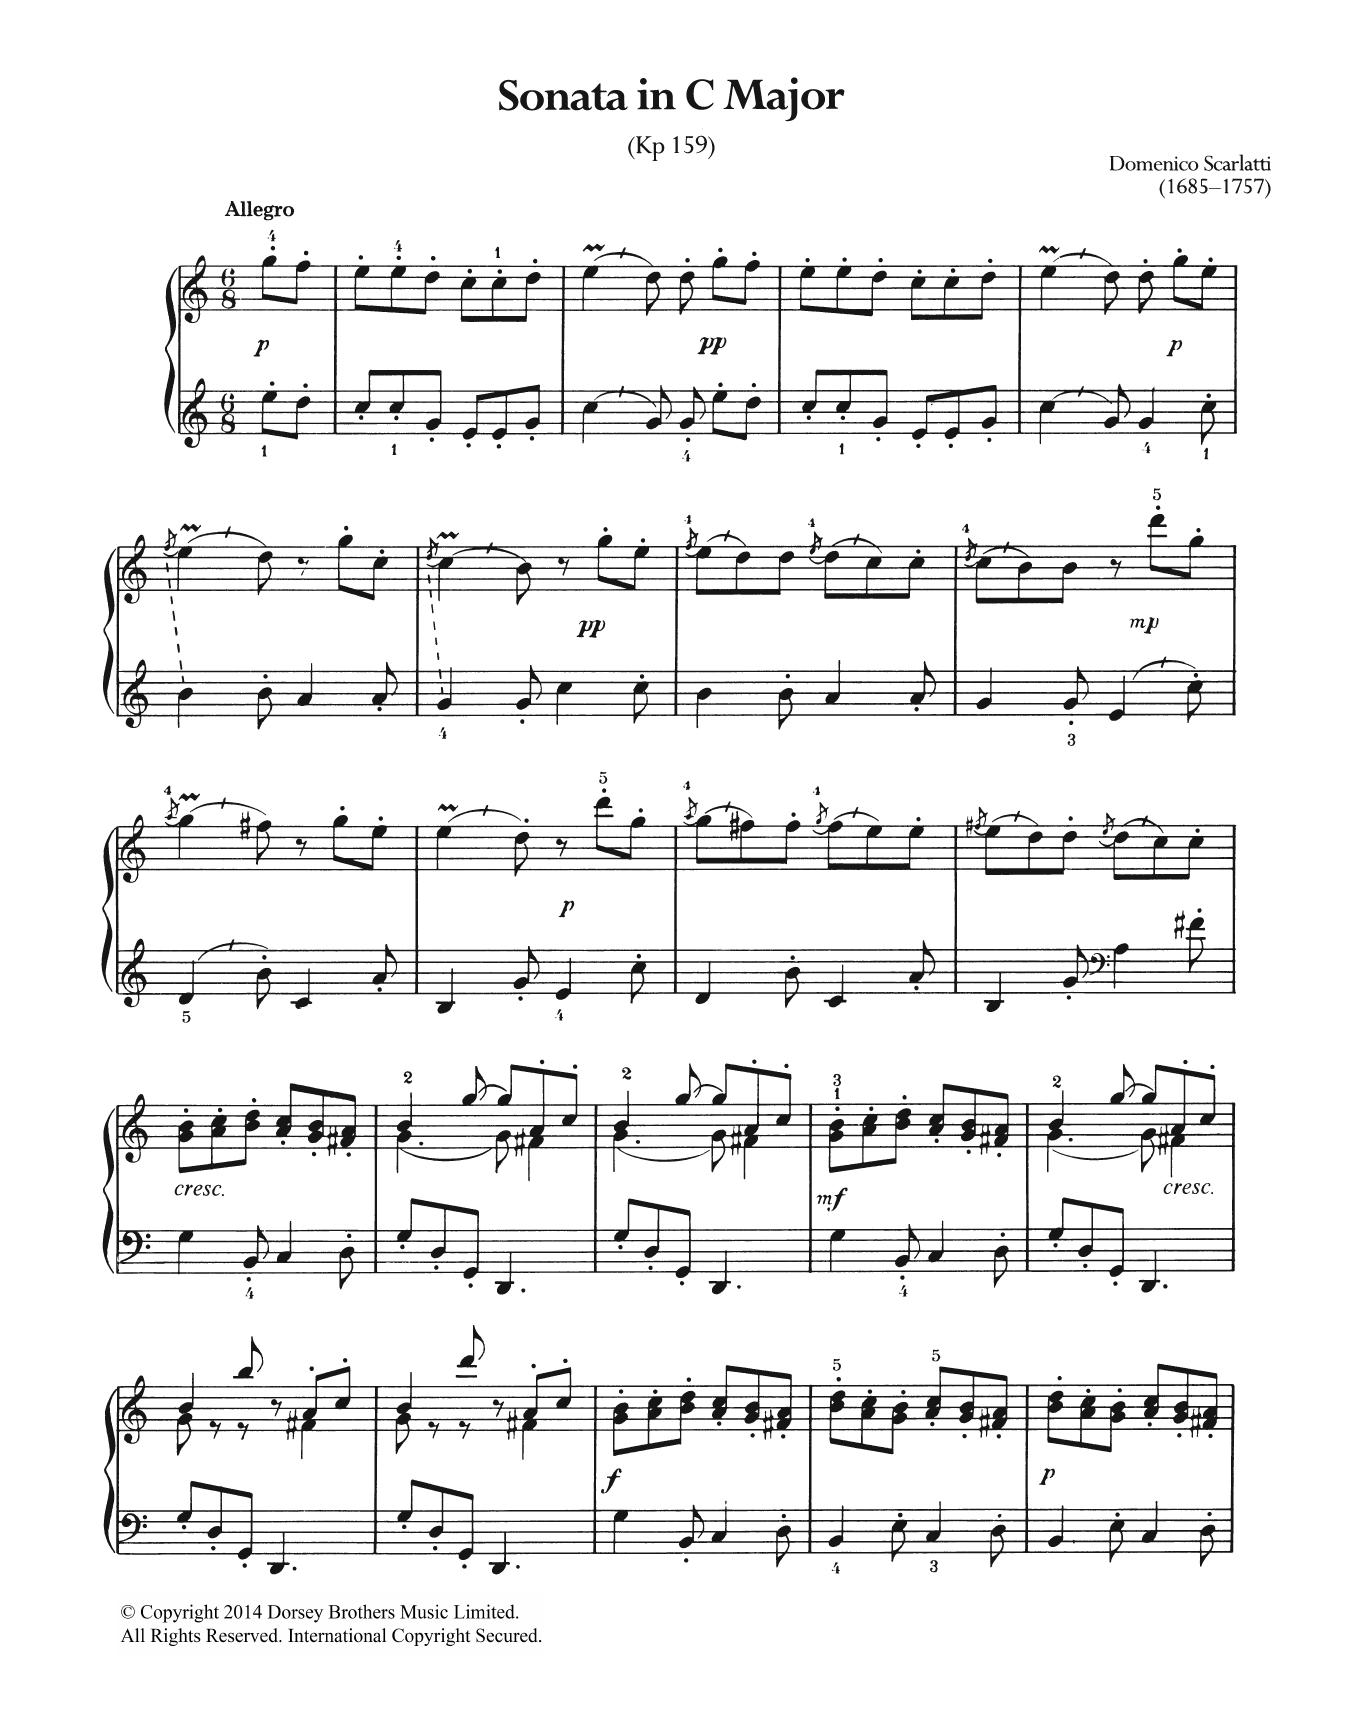 Download Domenico Scarlatti Sonata In C Major, K.159 Sheet Music and learn how to play Piano PDF digital score in minutes